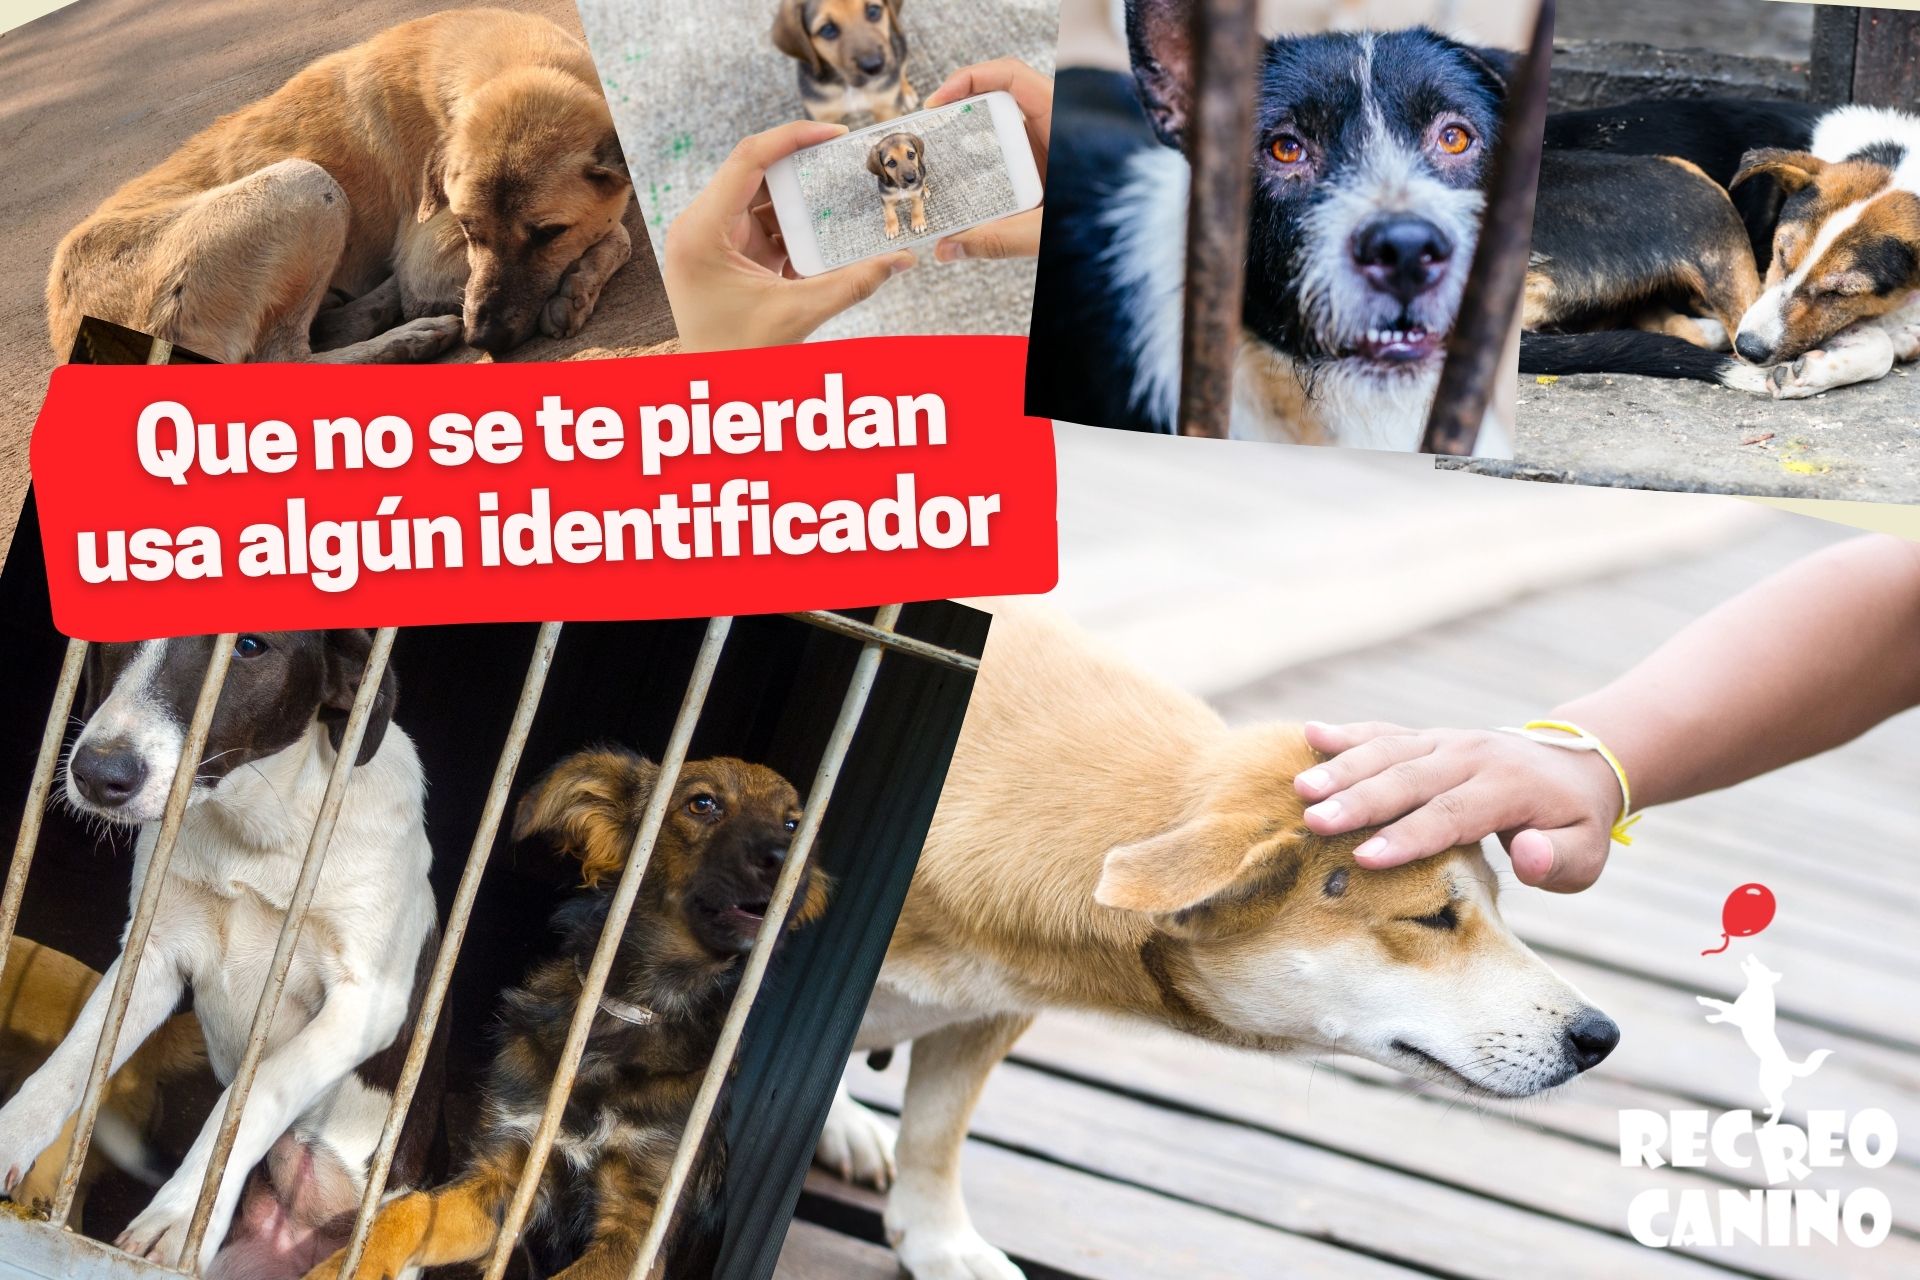 dog care, dog safety, dog id tags, identificador para perros